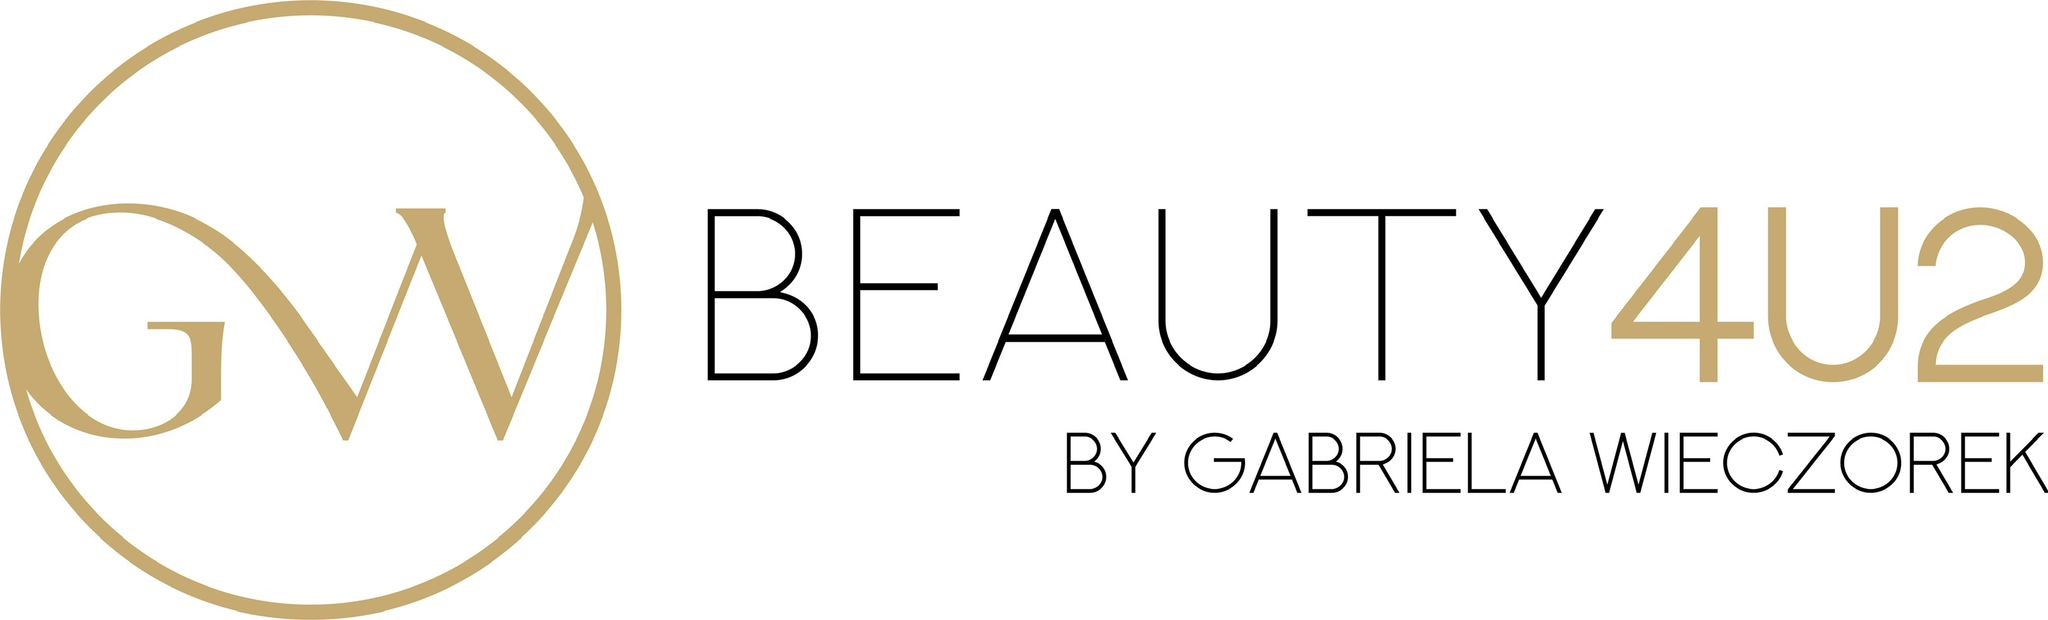 Beauty4U2 by Gabriela Wieczorek 